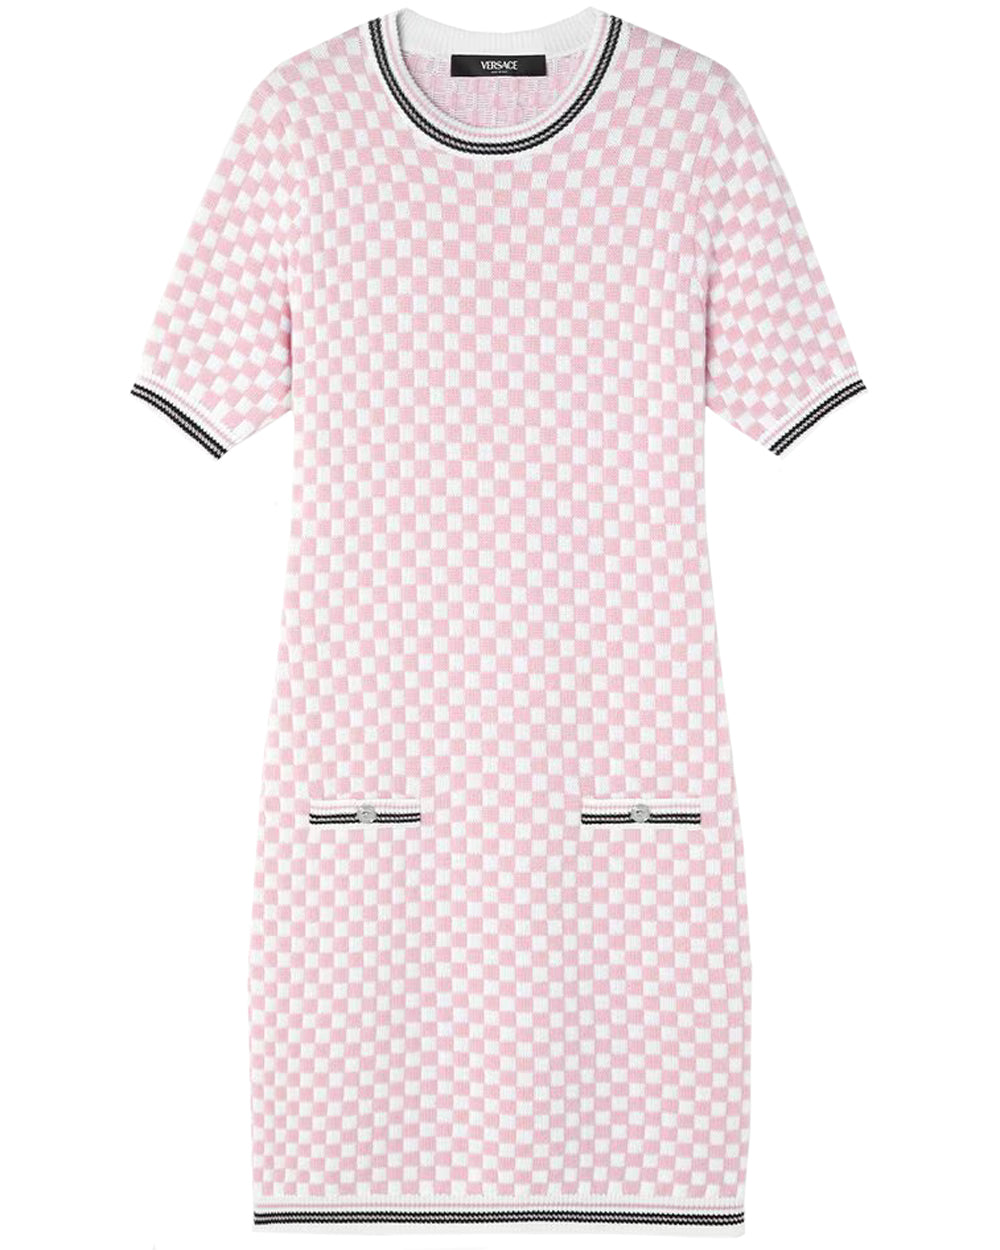 Pink Knit Jacquard Check Dress